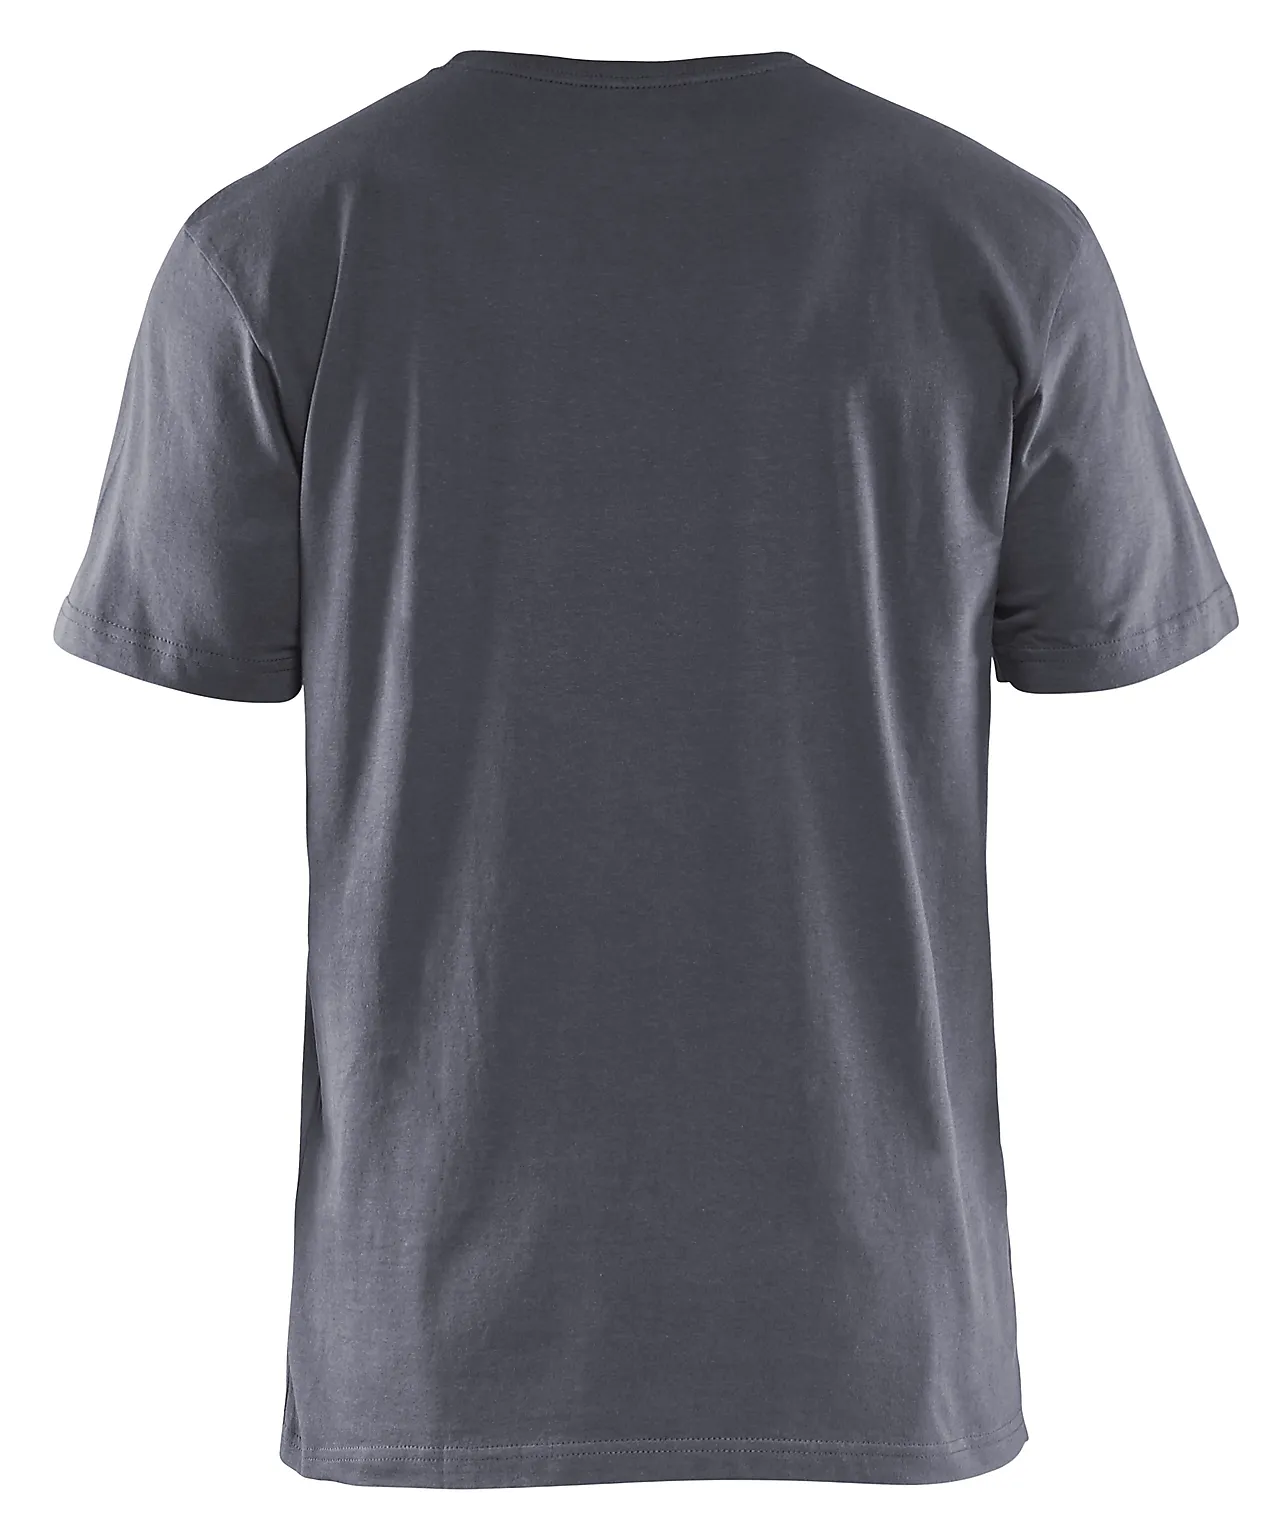 T-skjorte 5 pk 332510429400xl grå null - null - 3 - Miniatyr